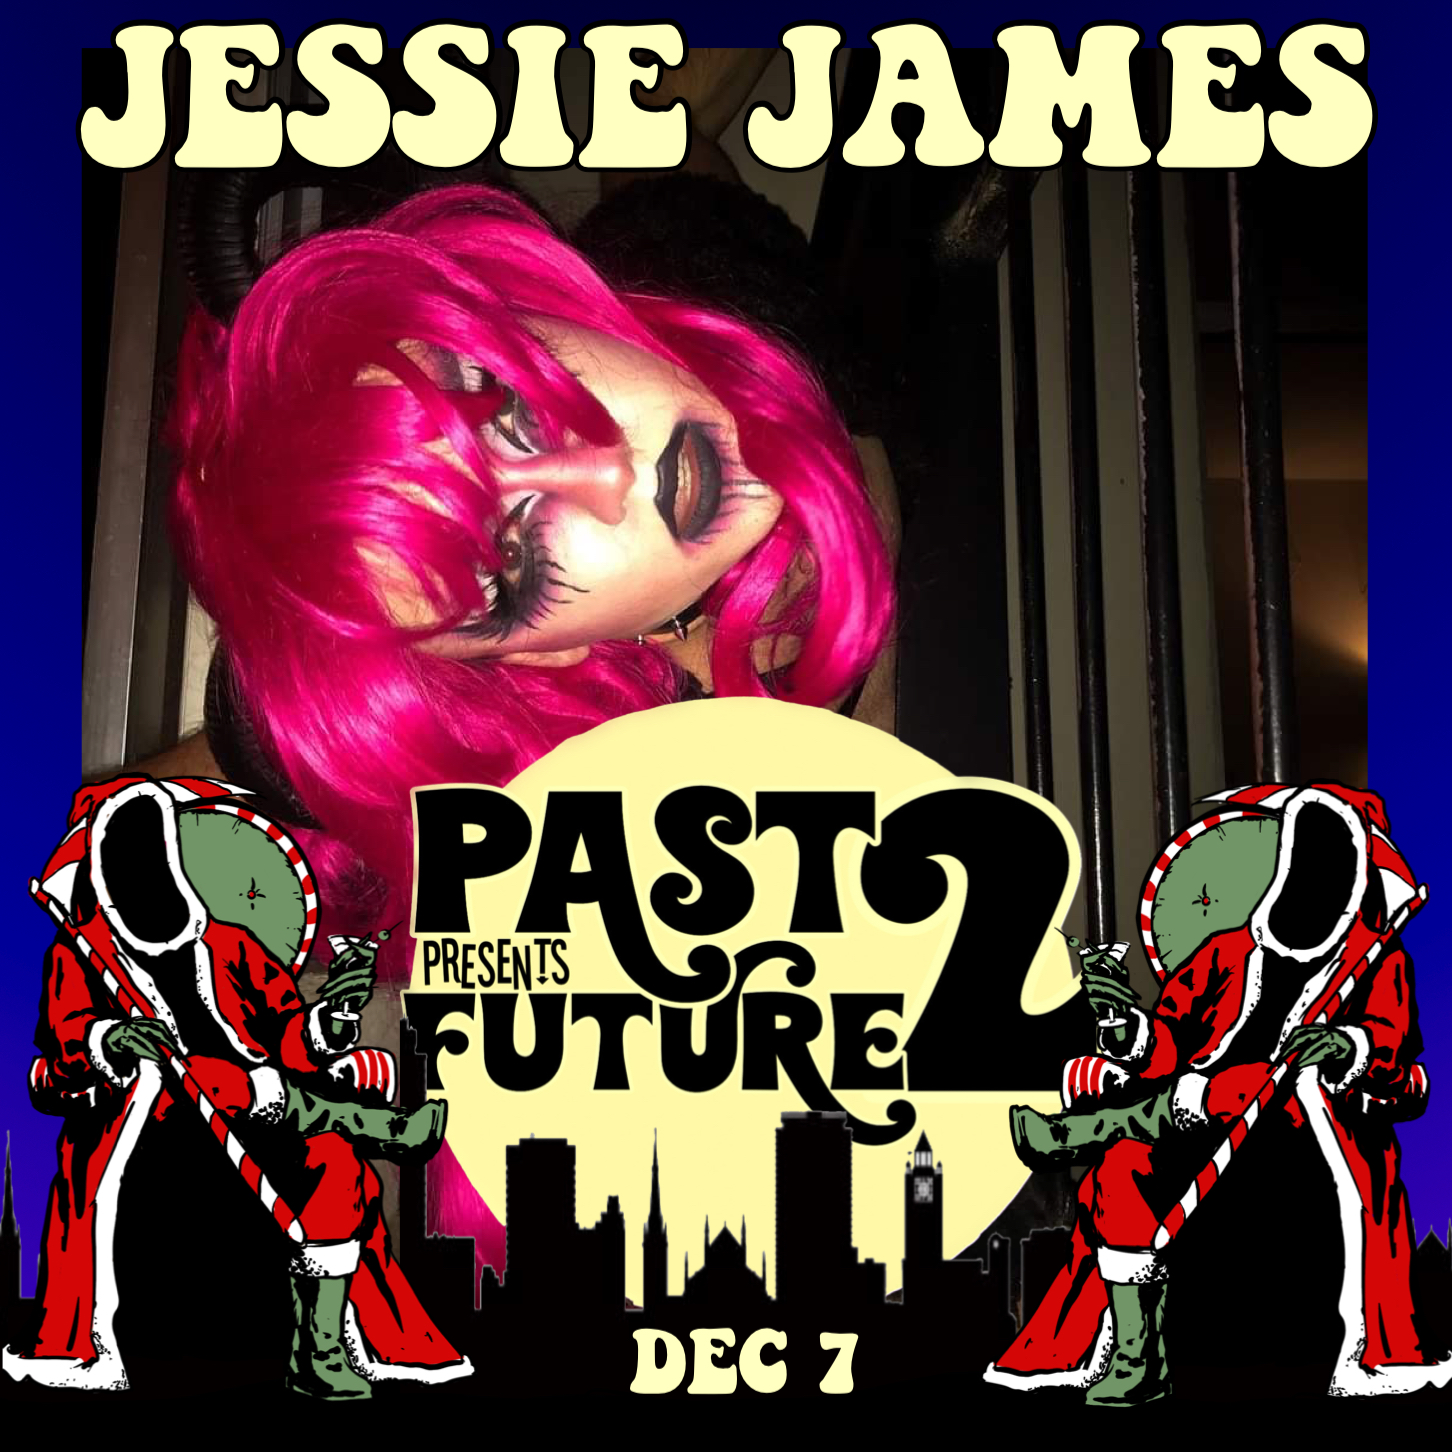 Jessie James Past Presents Future